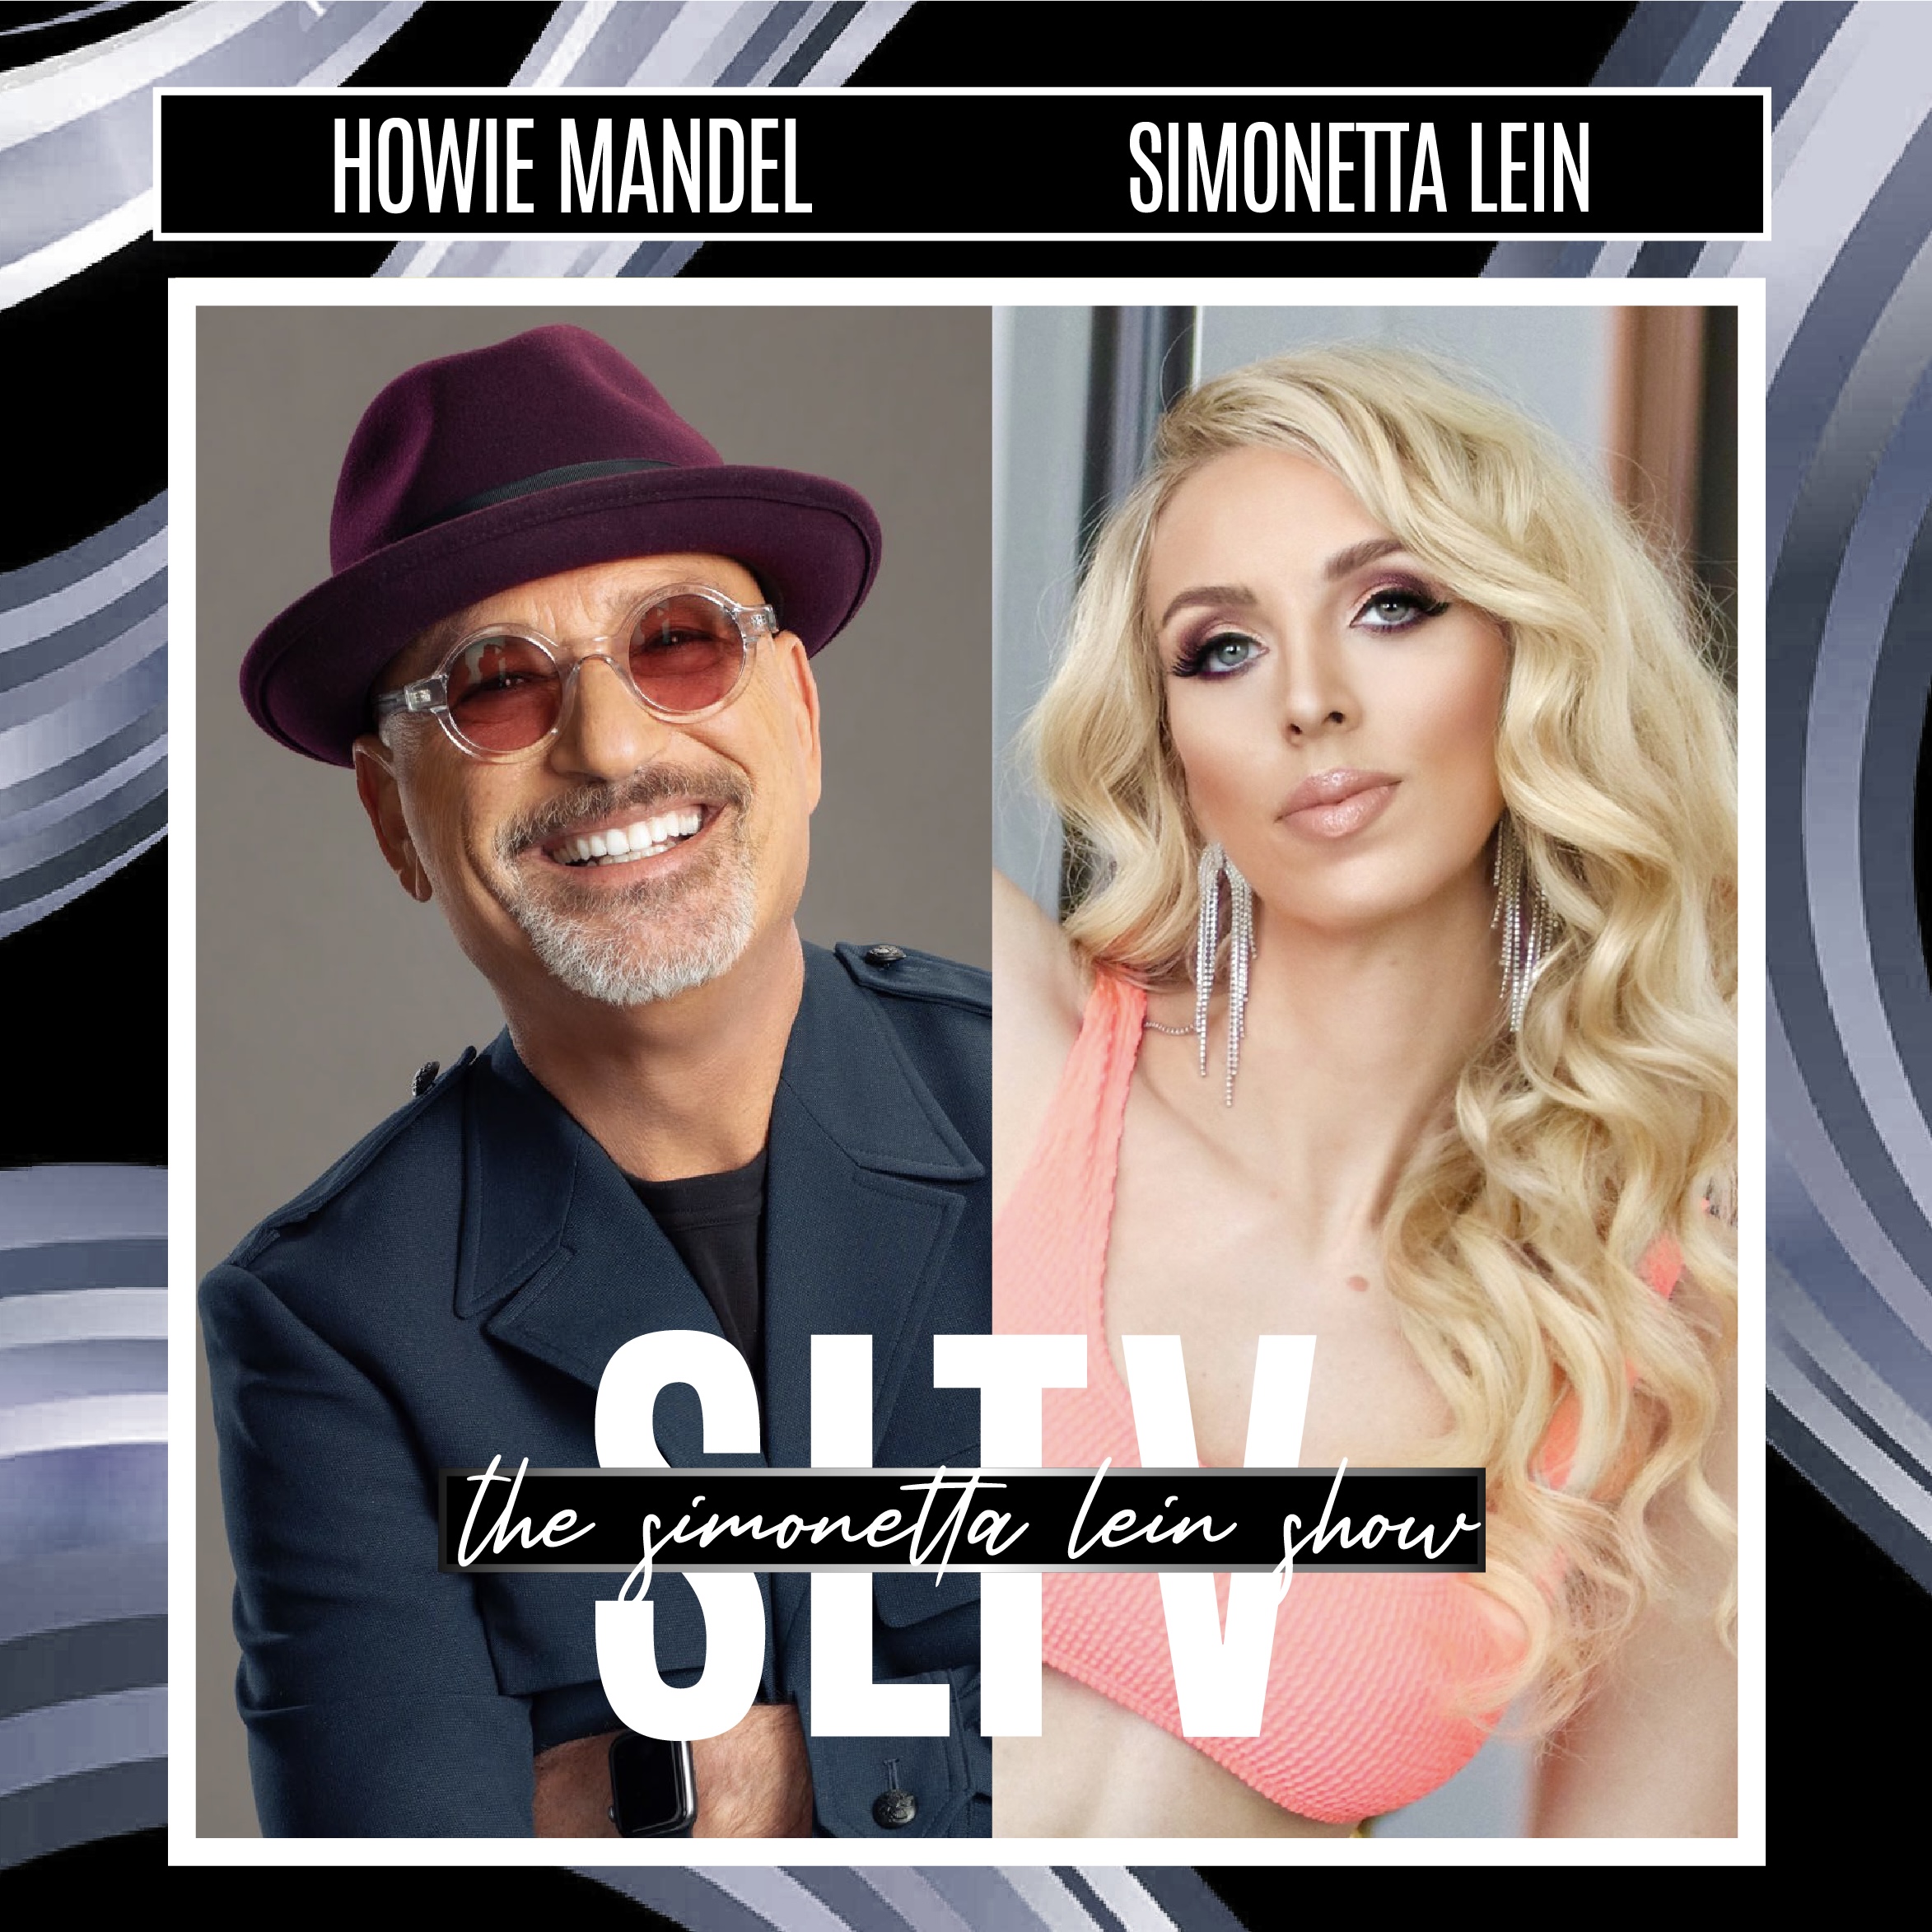 The Simonetta Lein Show with Howie Mandel On SLTV